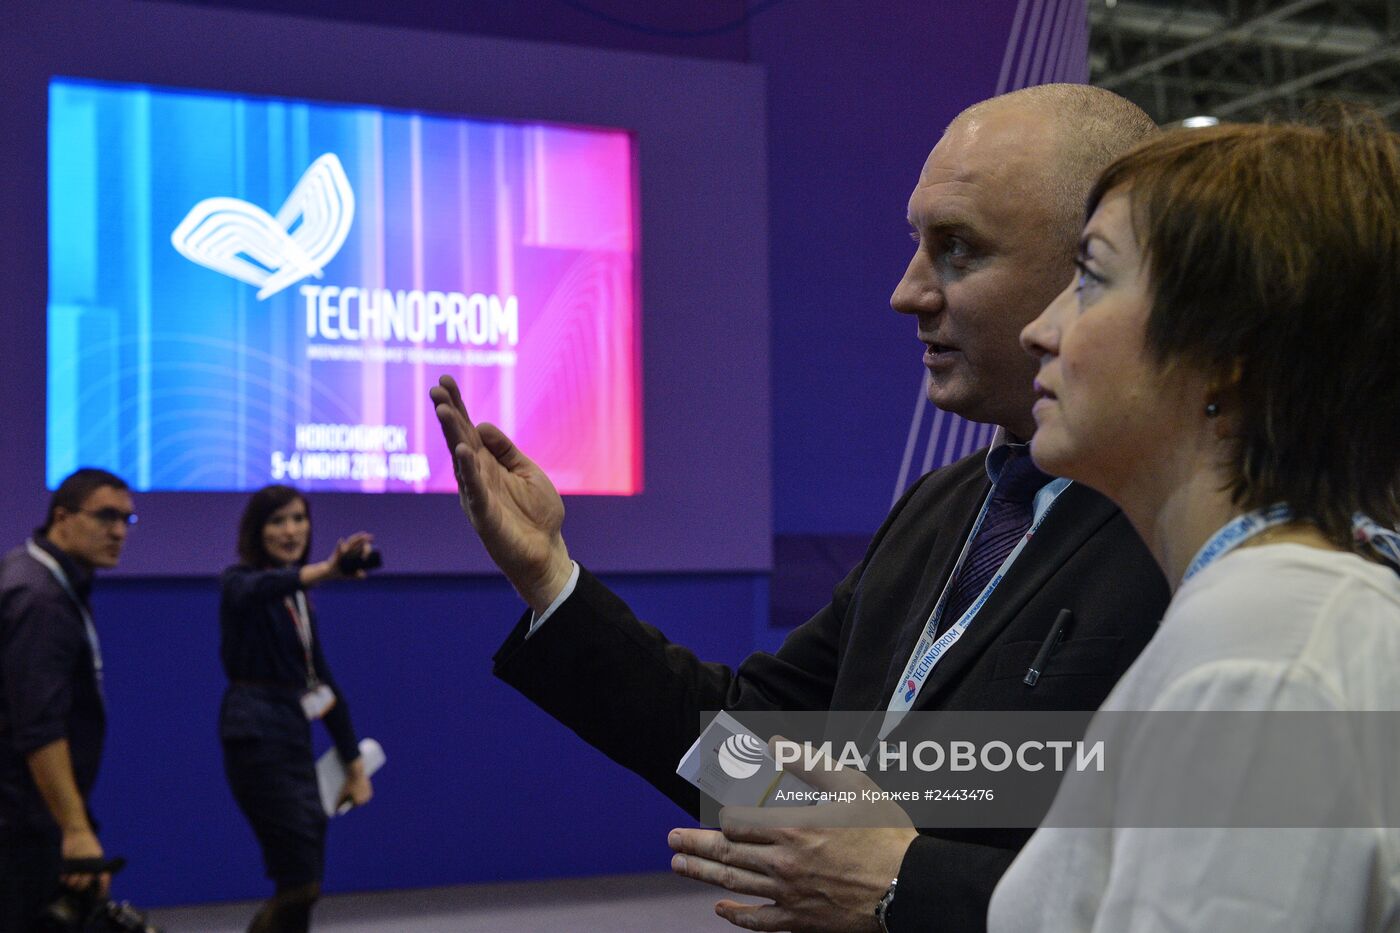 II Международный форум "Технопром"